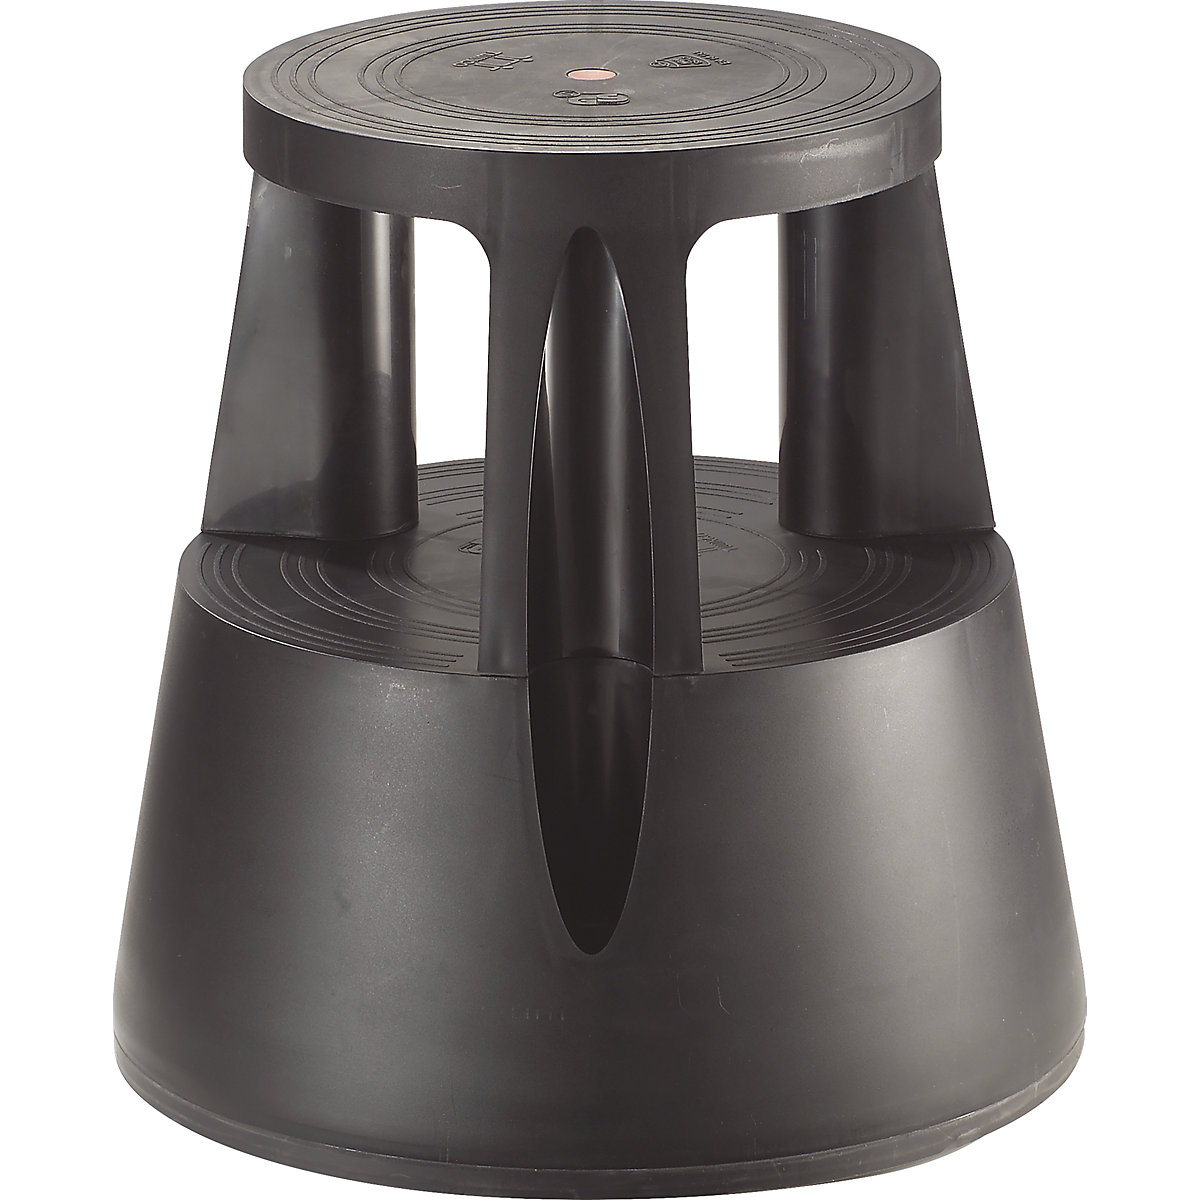 Kick stool made of shatterproof plastic – Twinco, max. load 150 kg, black-5